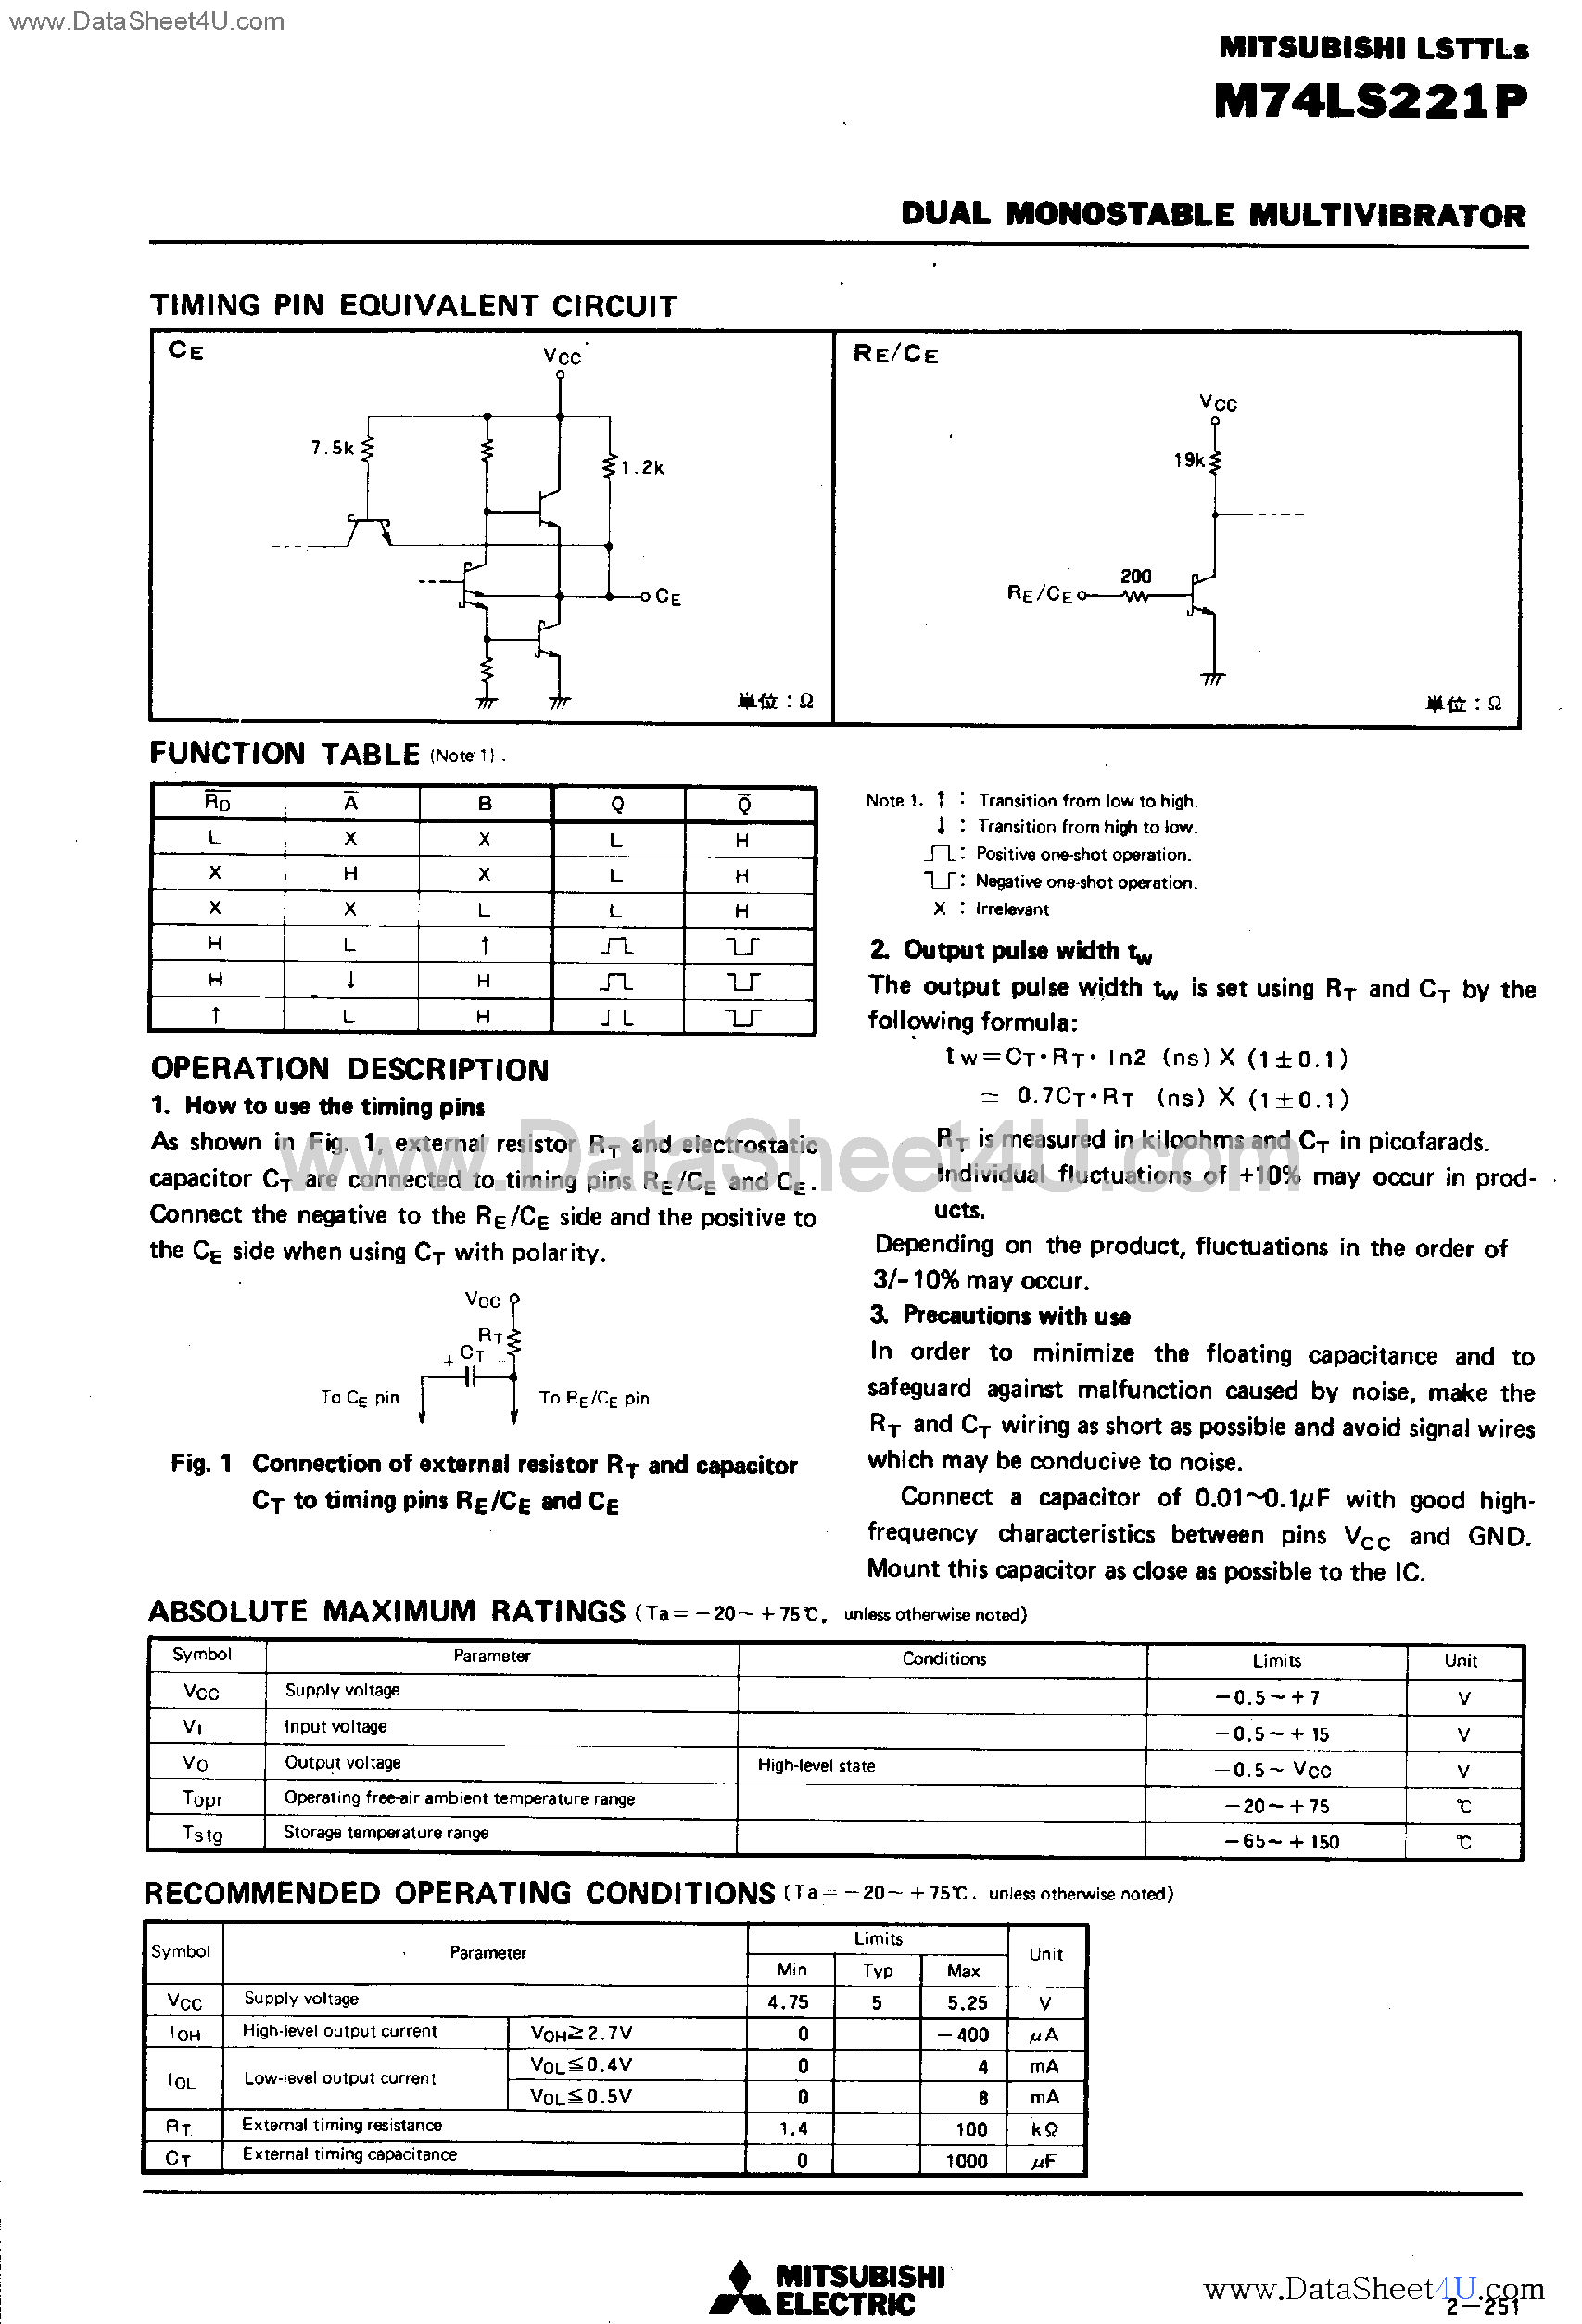 Datasheet M74LS221P - Dual Monostable Multivibrator page 2